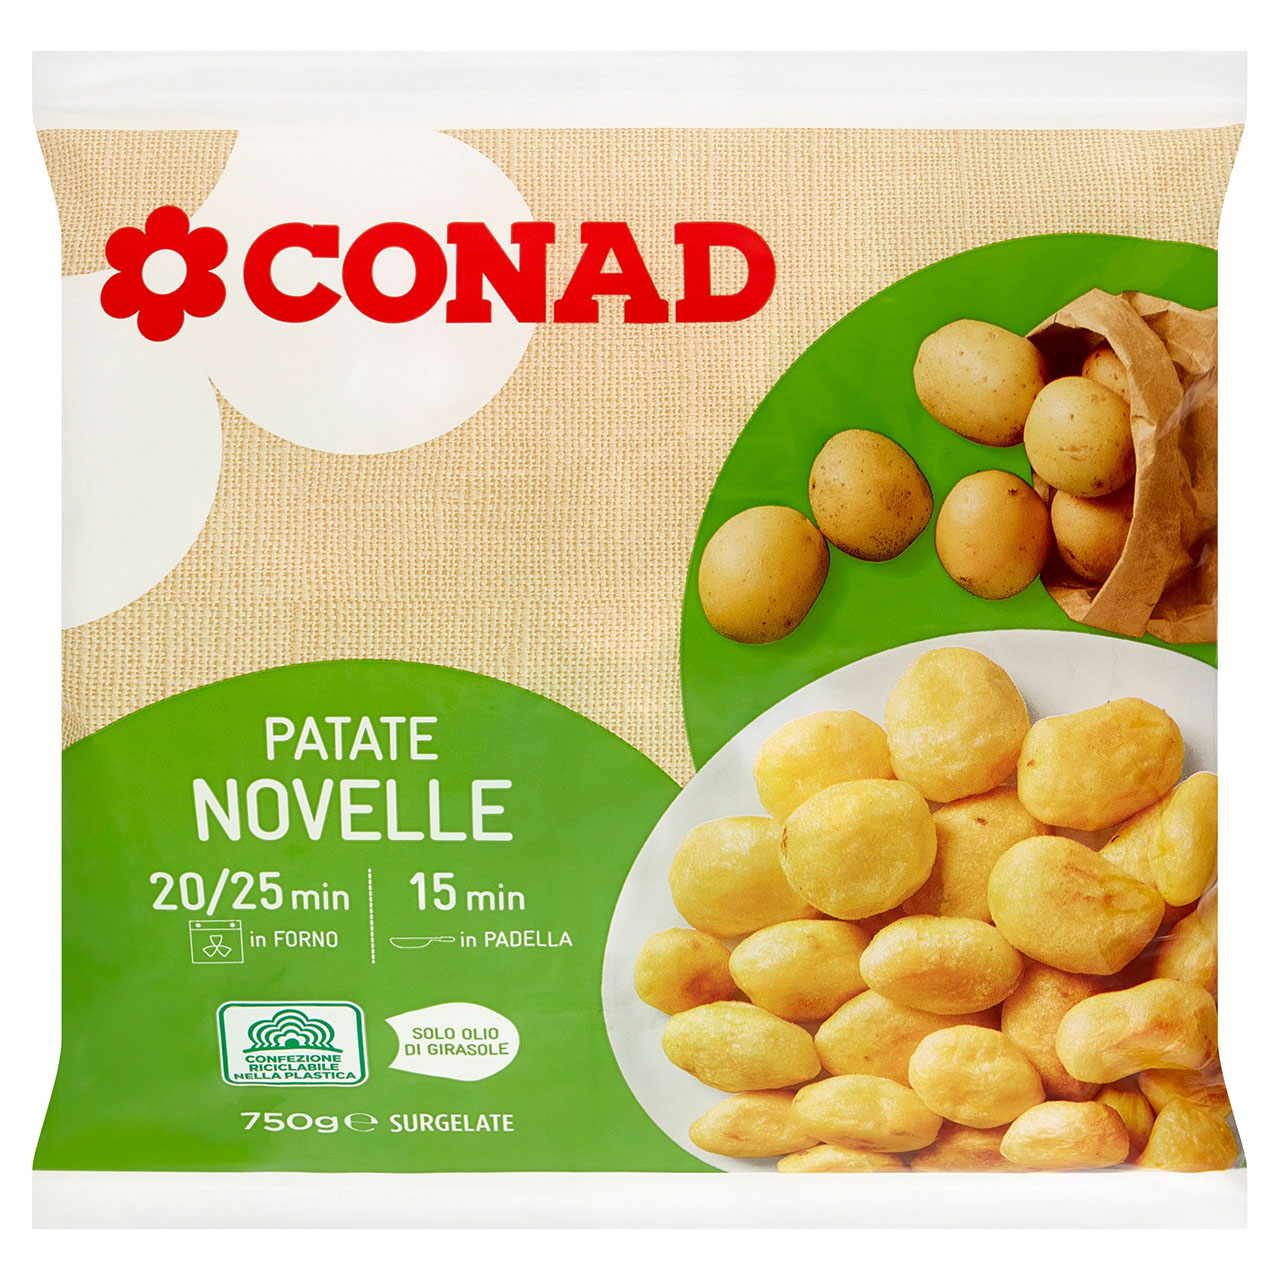 Patate Novelle Surgelate Conad in vendita online